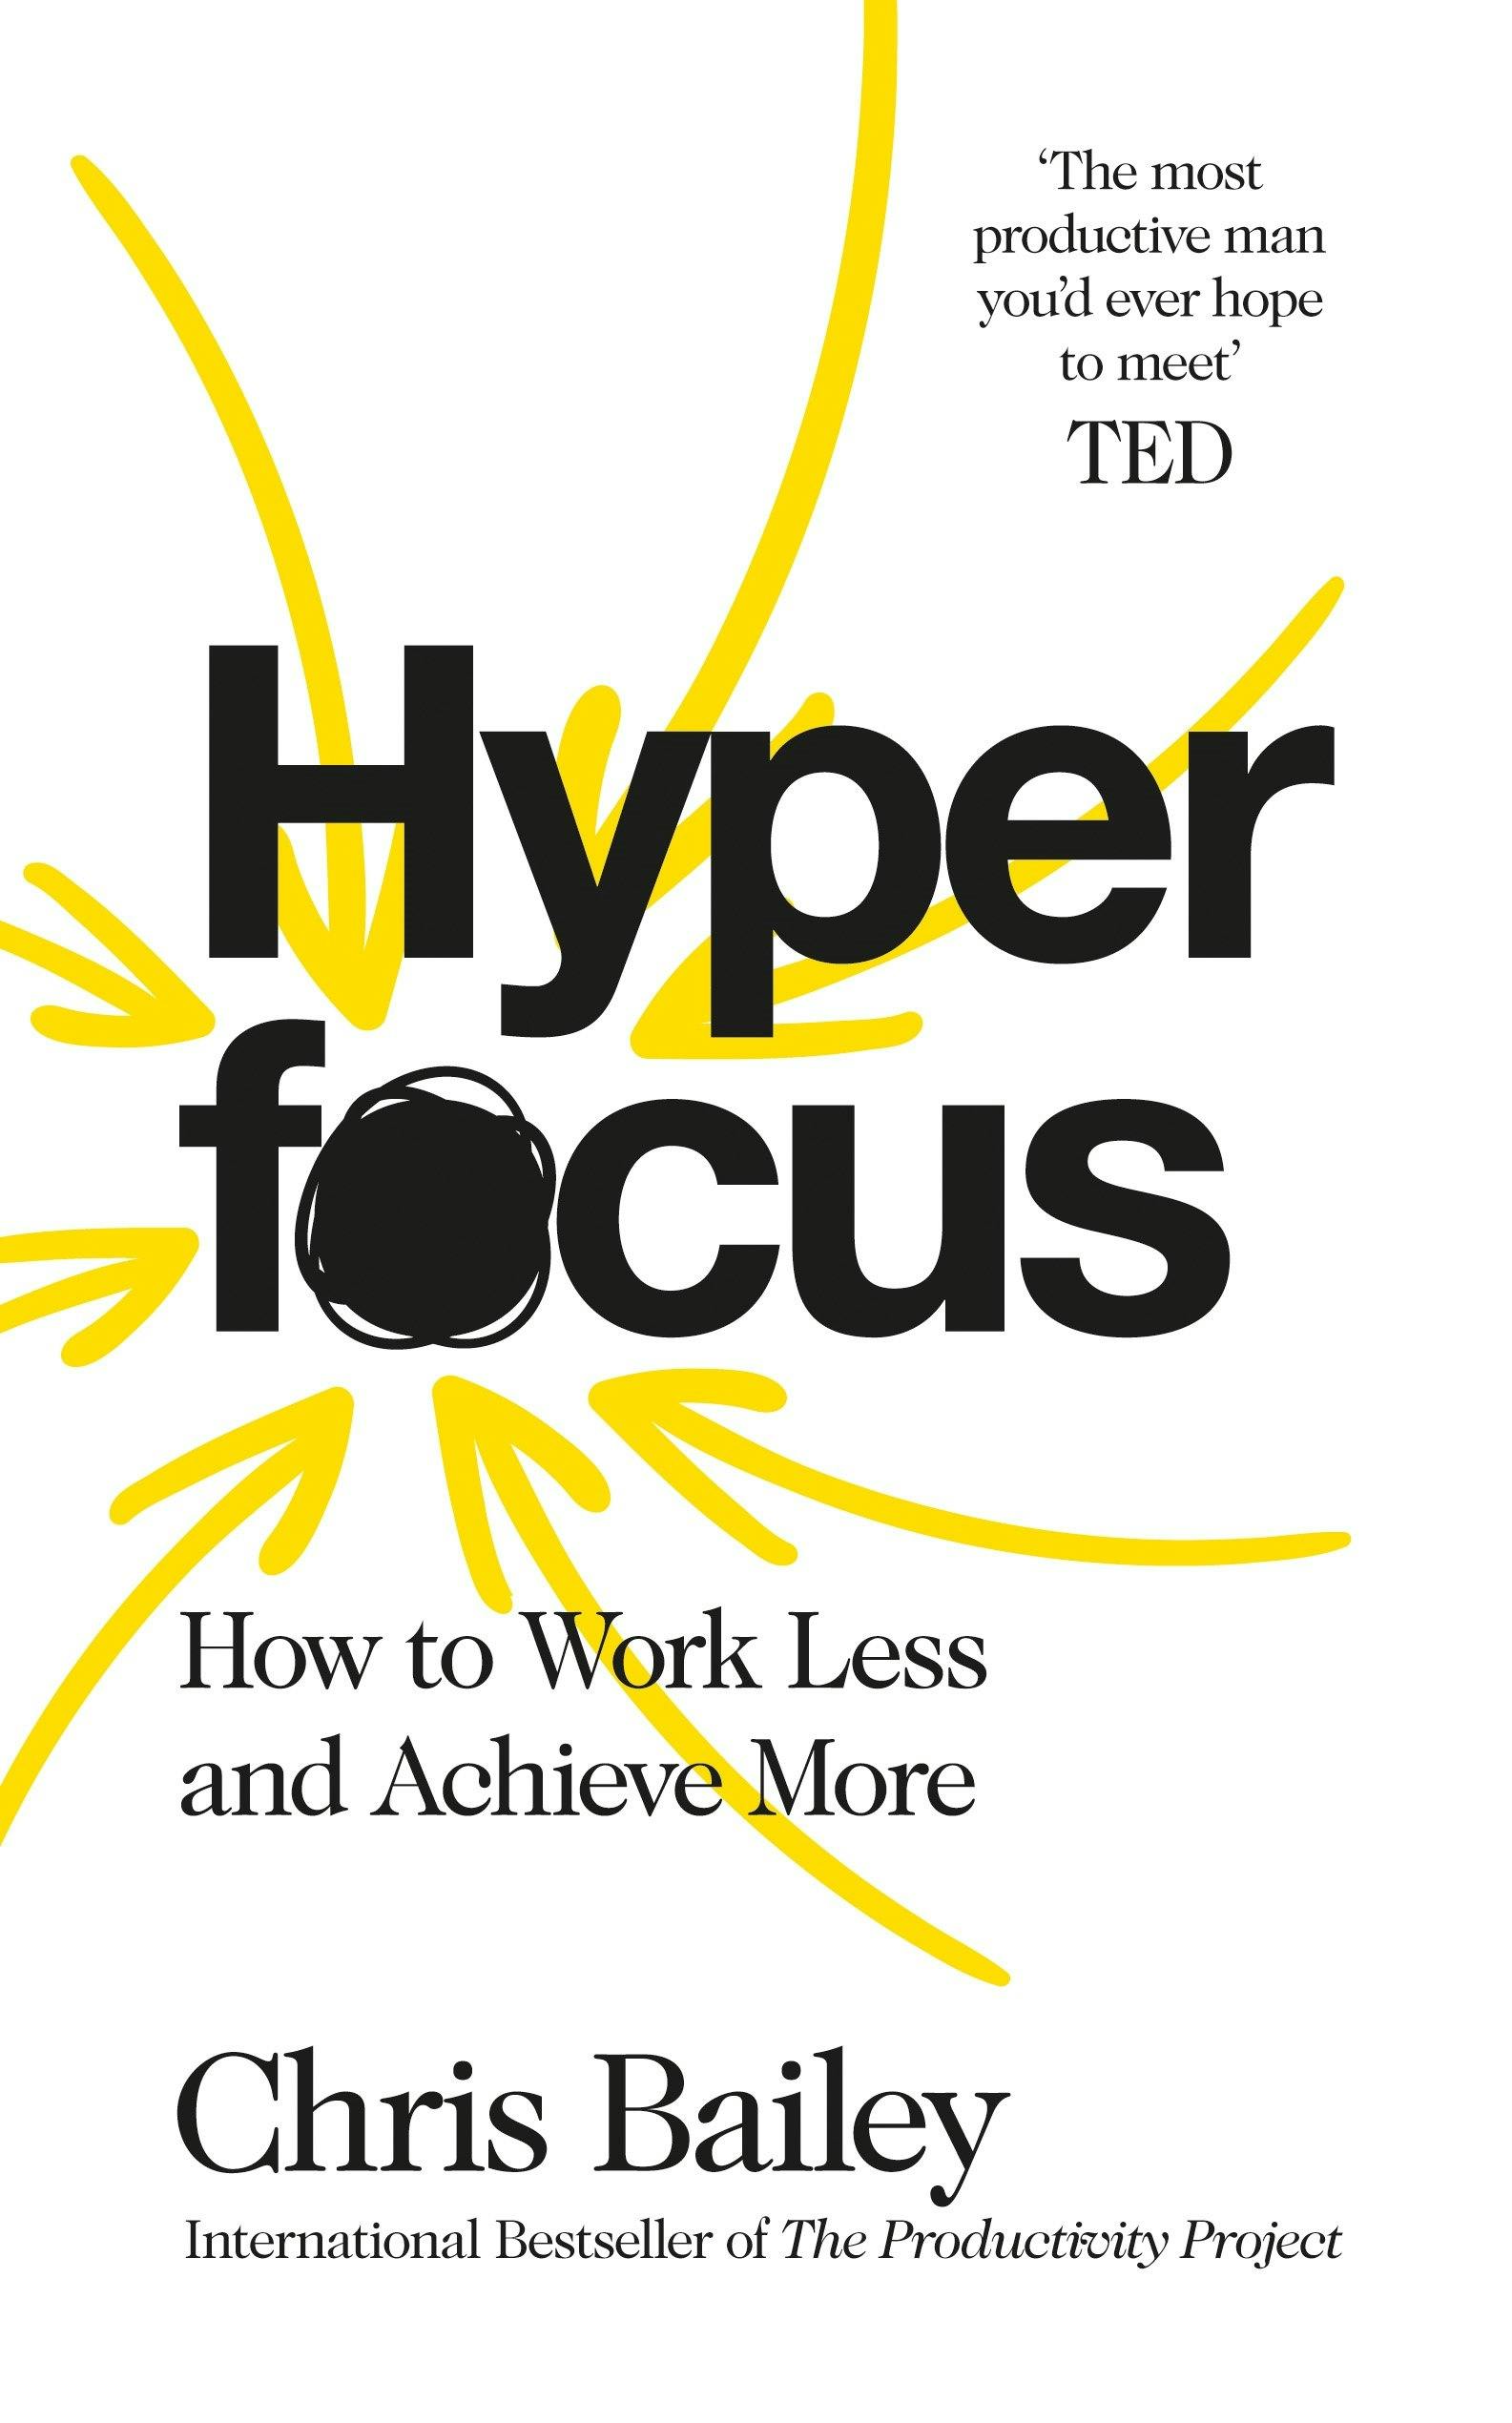 Hyperfocus cover